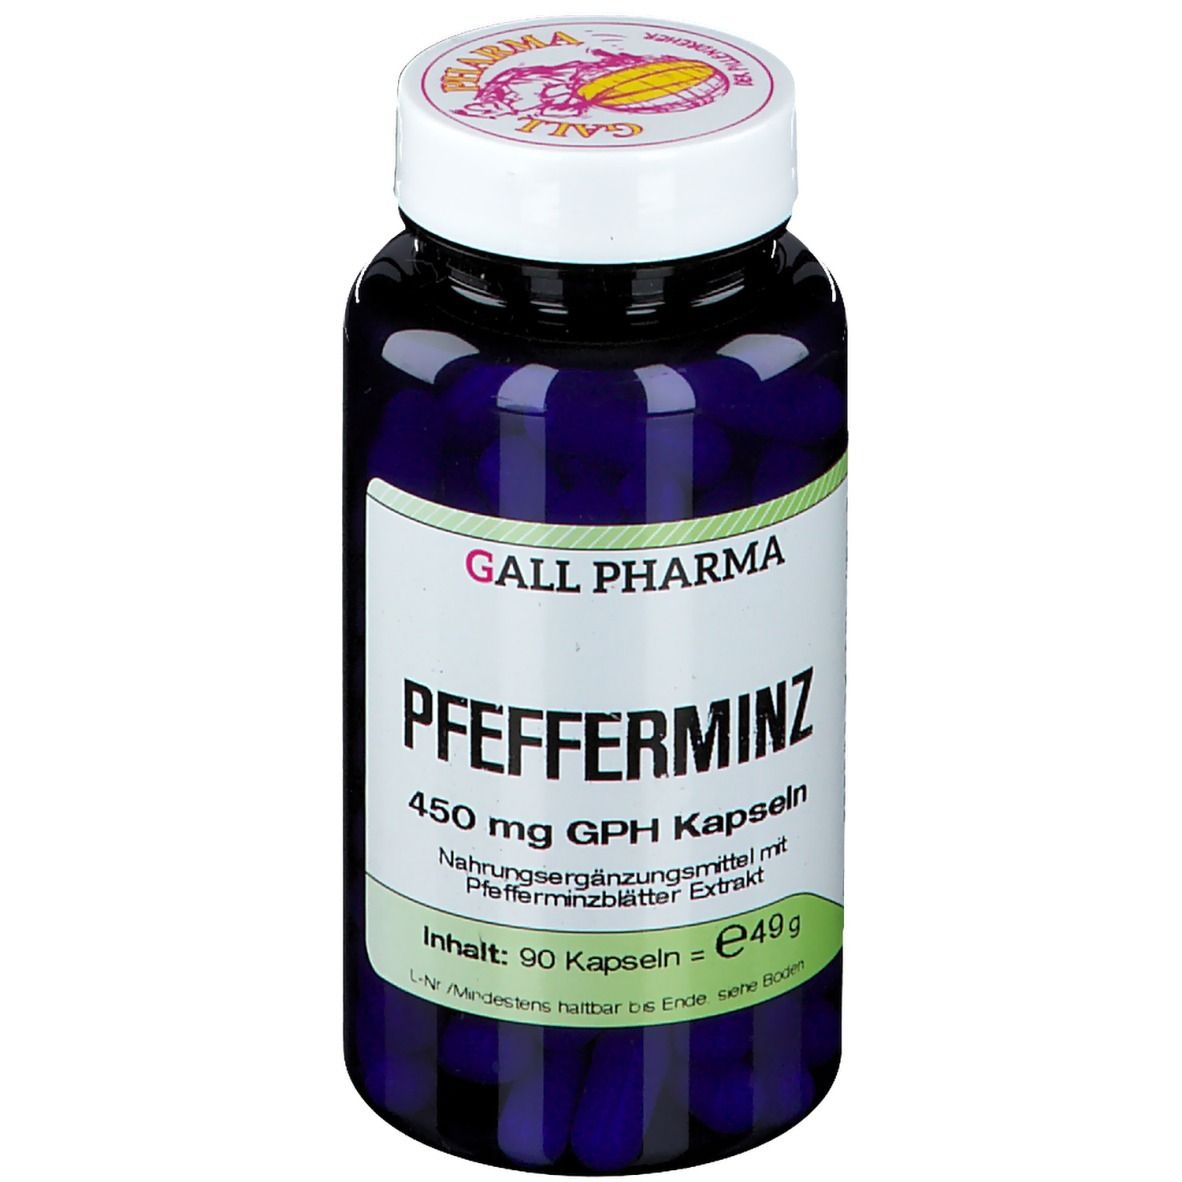 Gall Pharma Pfefferminz 450 mg GPH Kapseln